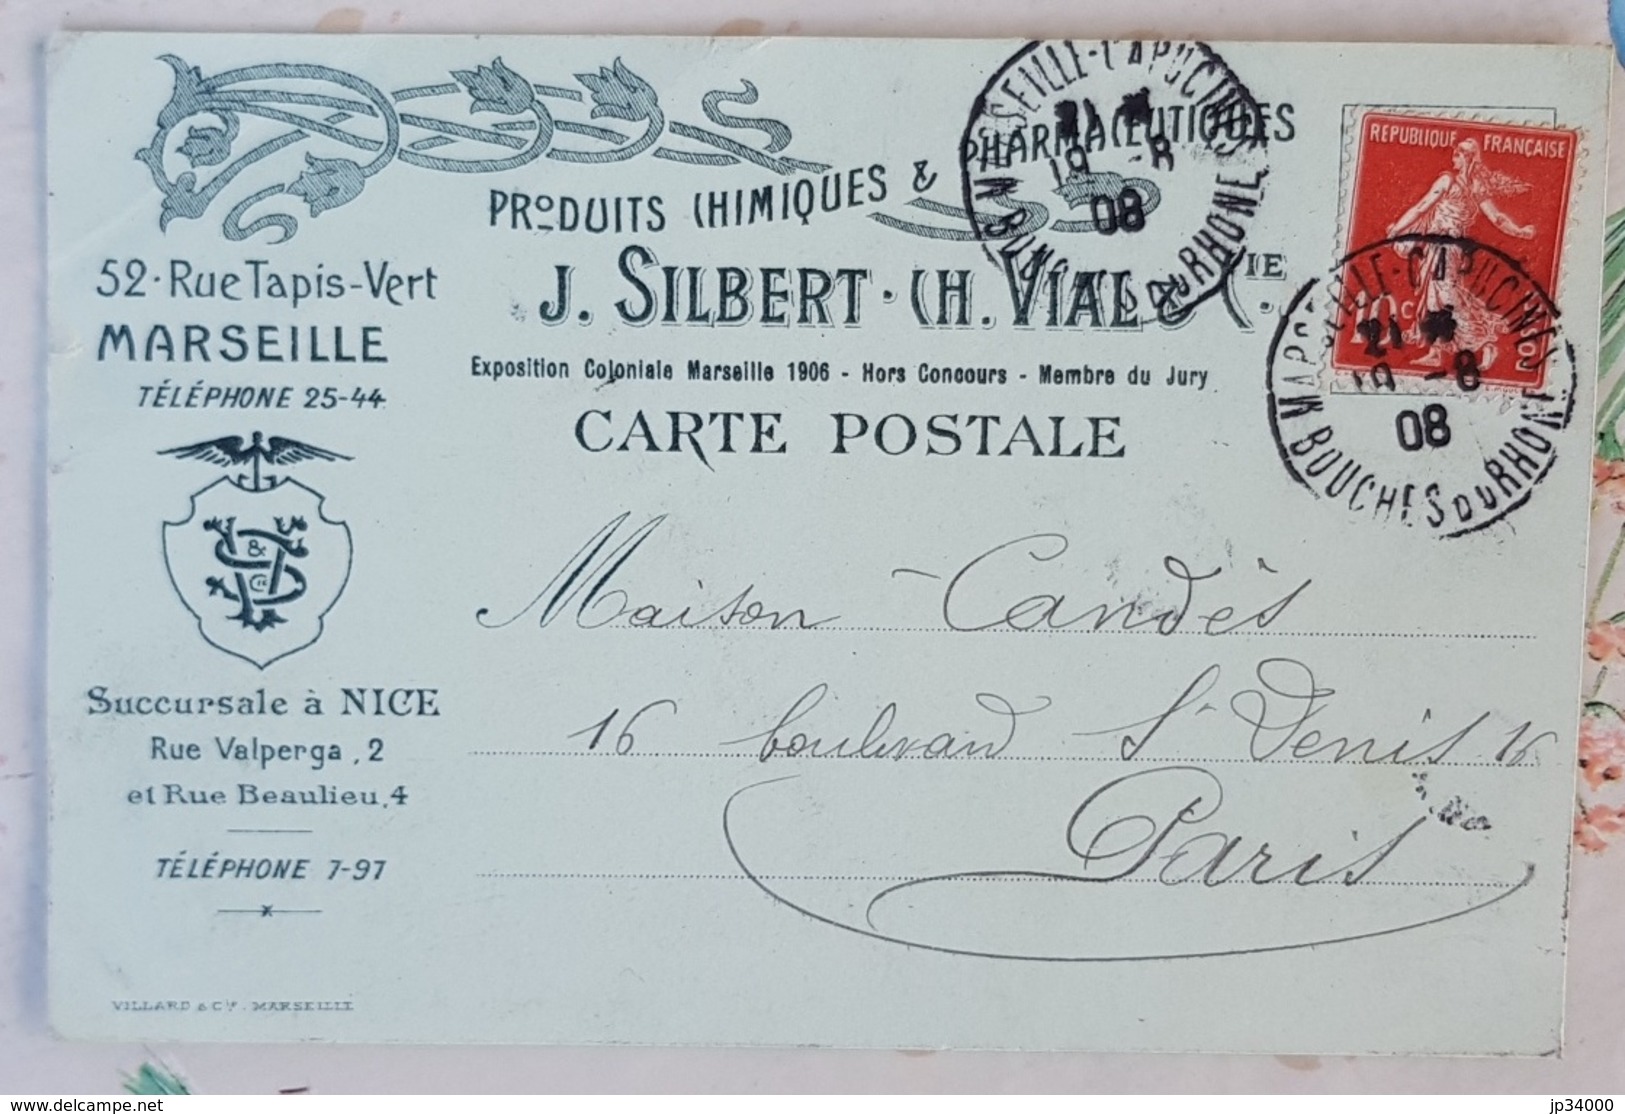 FRANCE Phamarcie, Medecine, Carte Postale Publicitaire SILBERT. VIAL à Marseille 1908 - Pharmacie